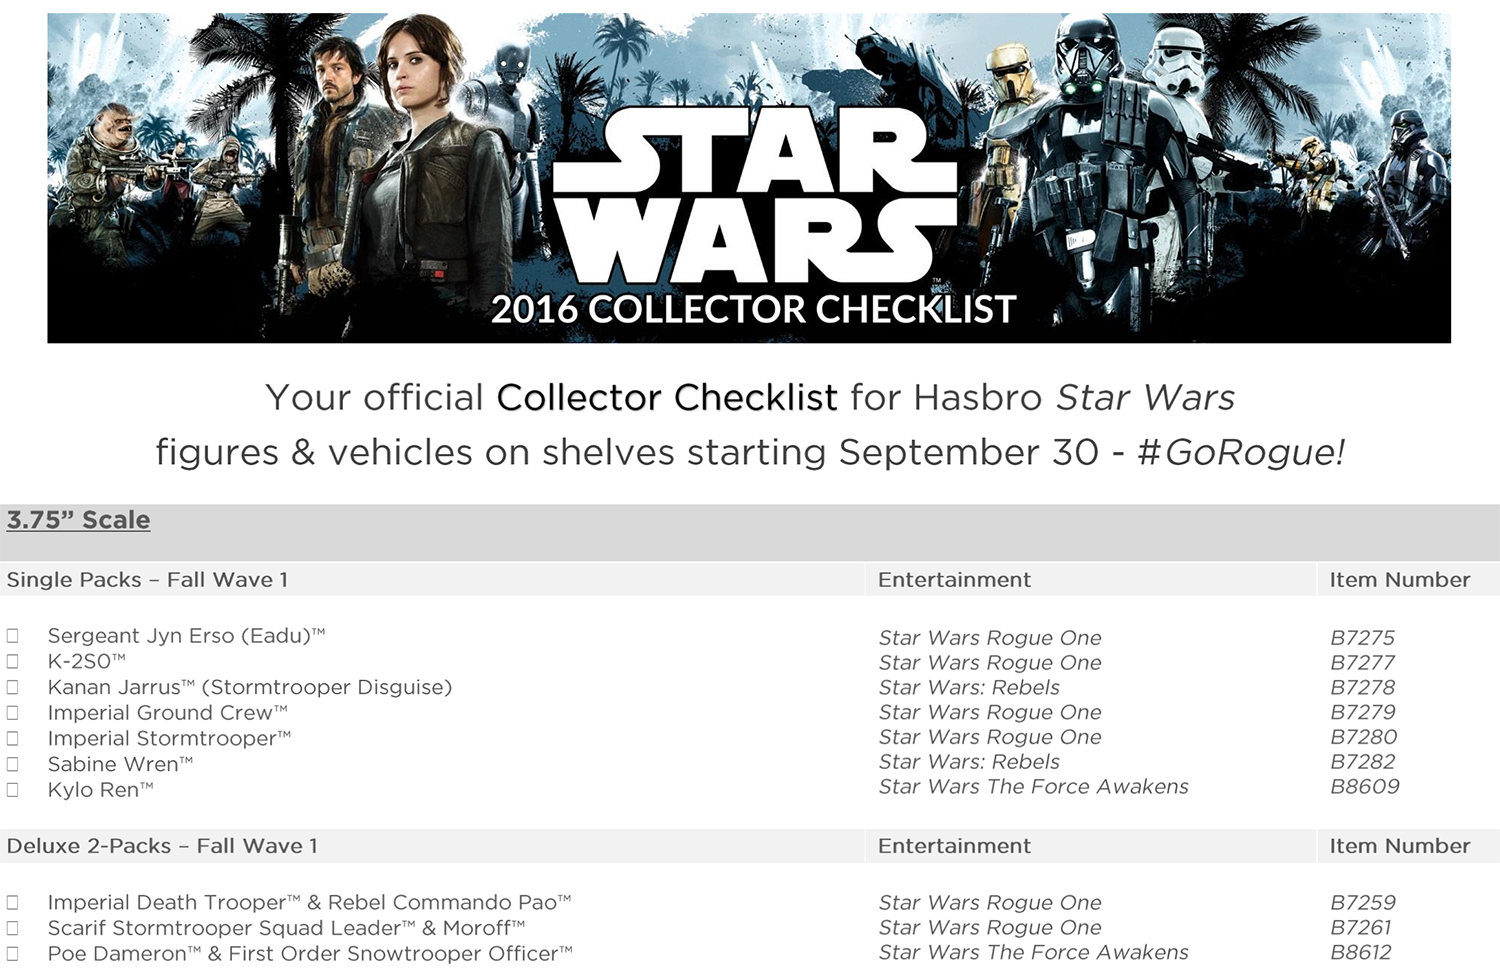 Official Hasbro Star Wars checklist for Fall 2016